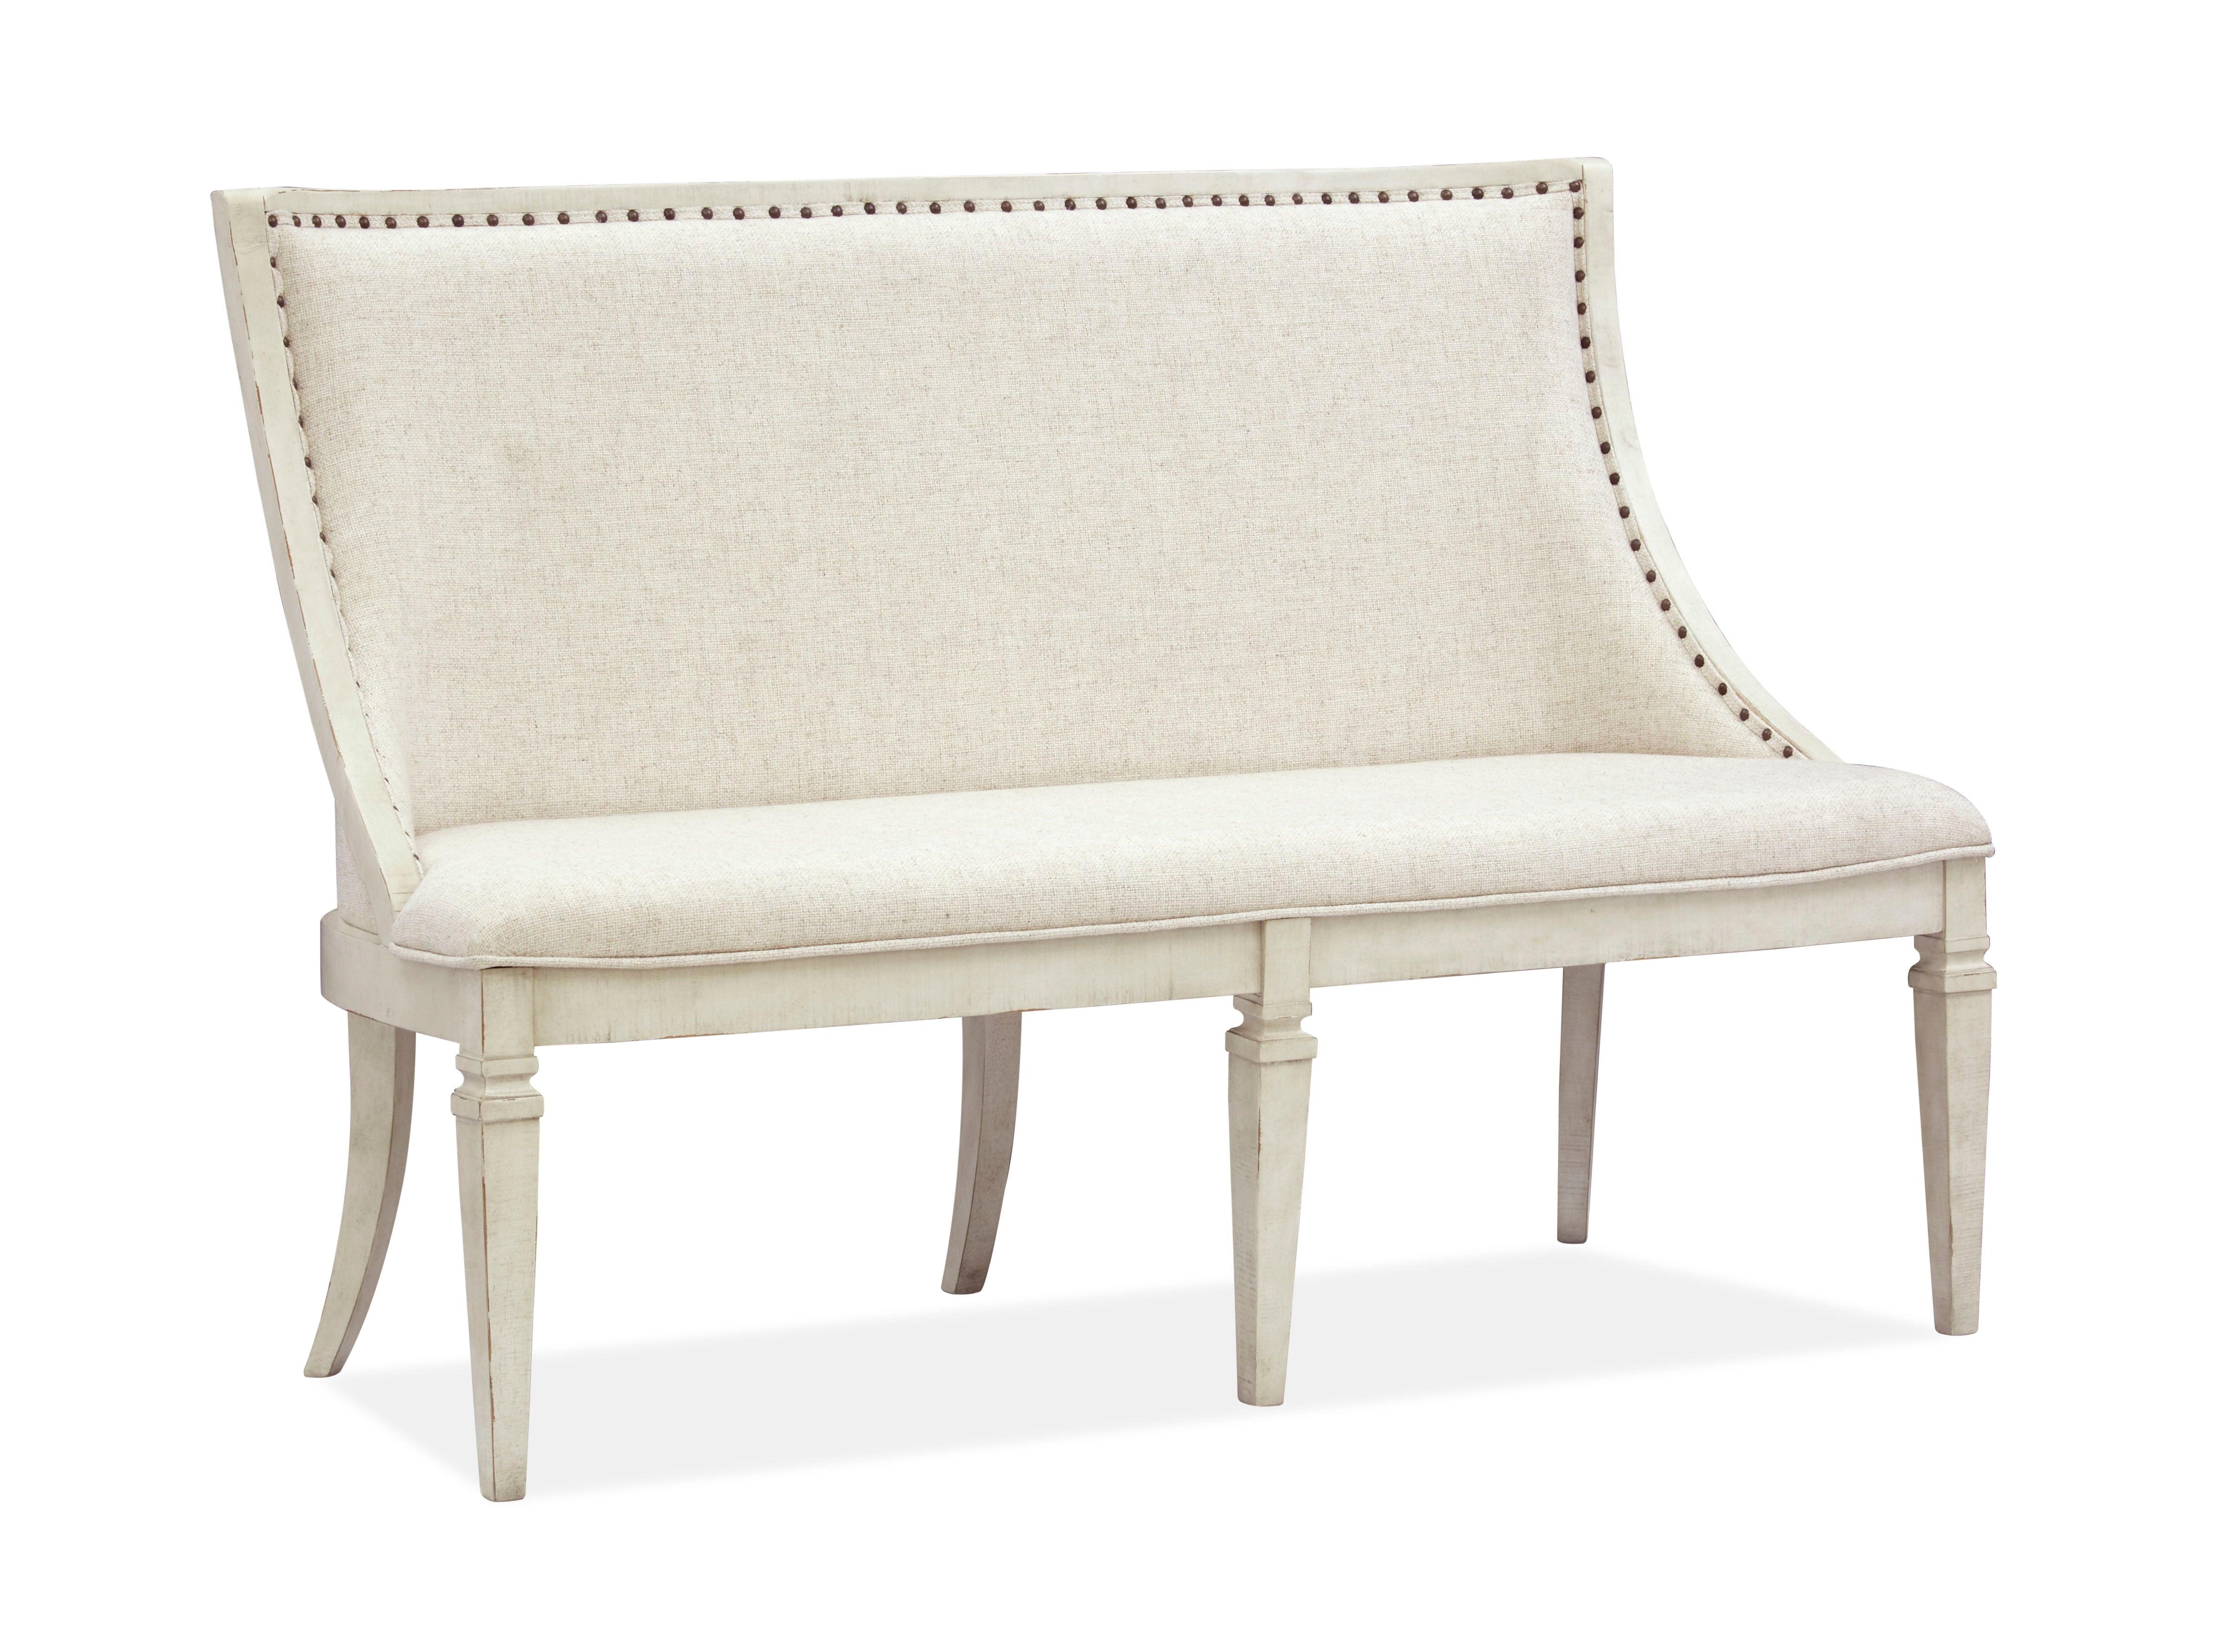 Magnussen Furniture - Newport - Bench With Upholstered Seat & Back - Alabaster - 5th Avenue Furniture